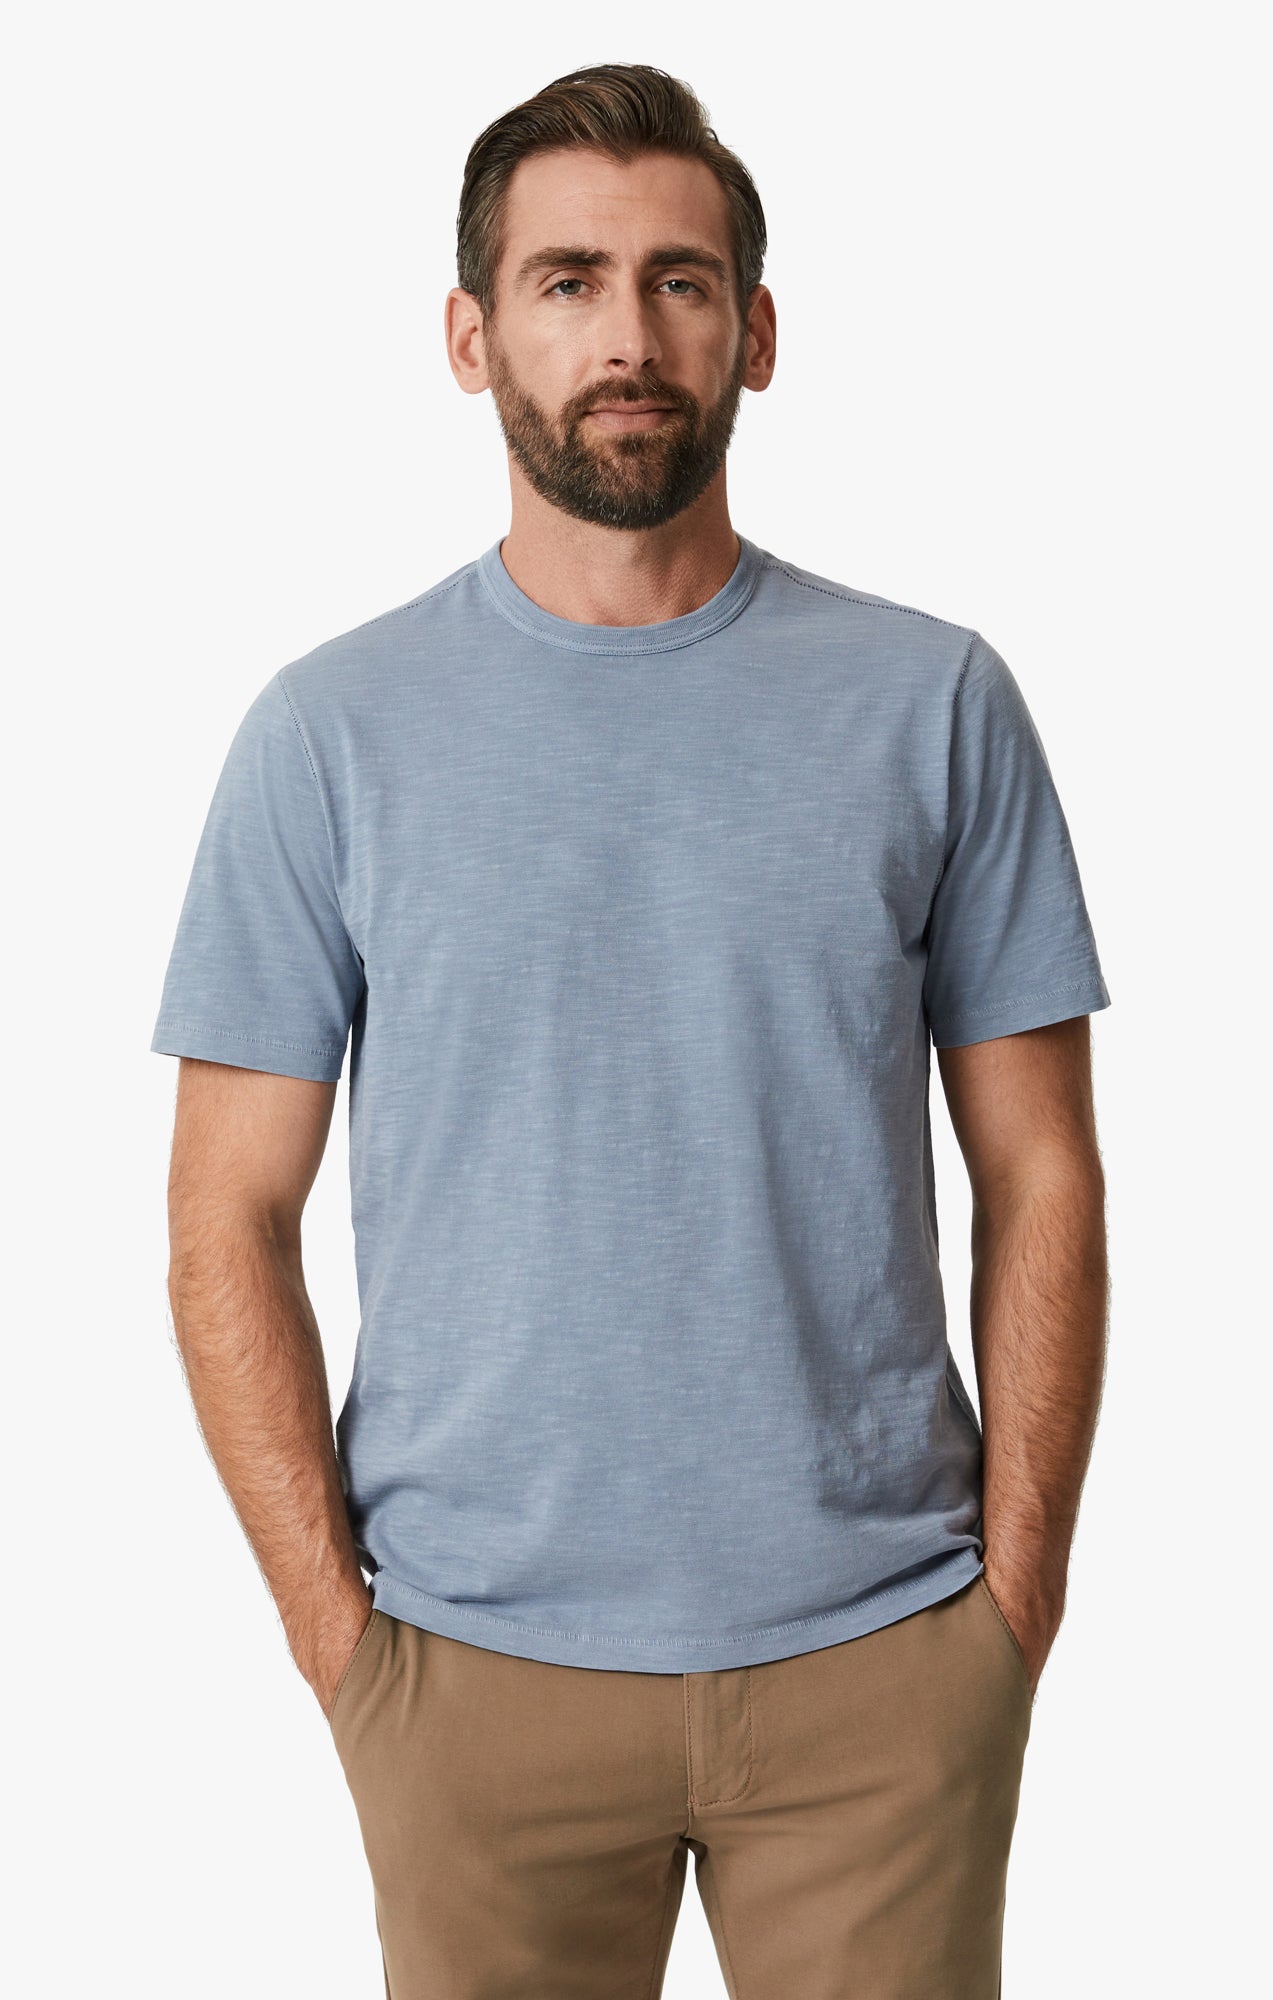 Crew Neck T-Shirts for Men - Buy Men Crew Neck T Shirts Online at Adventuras